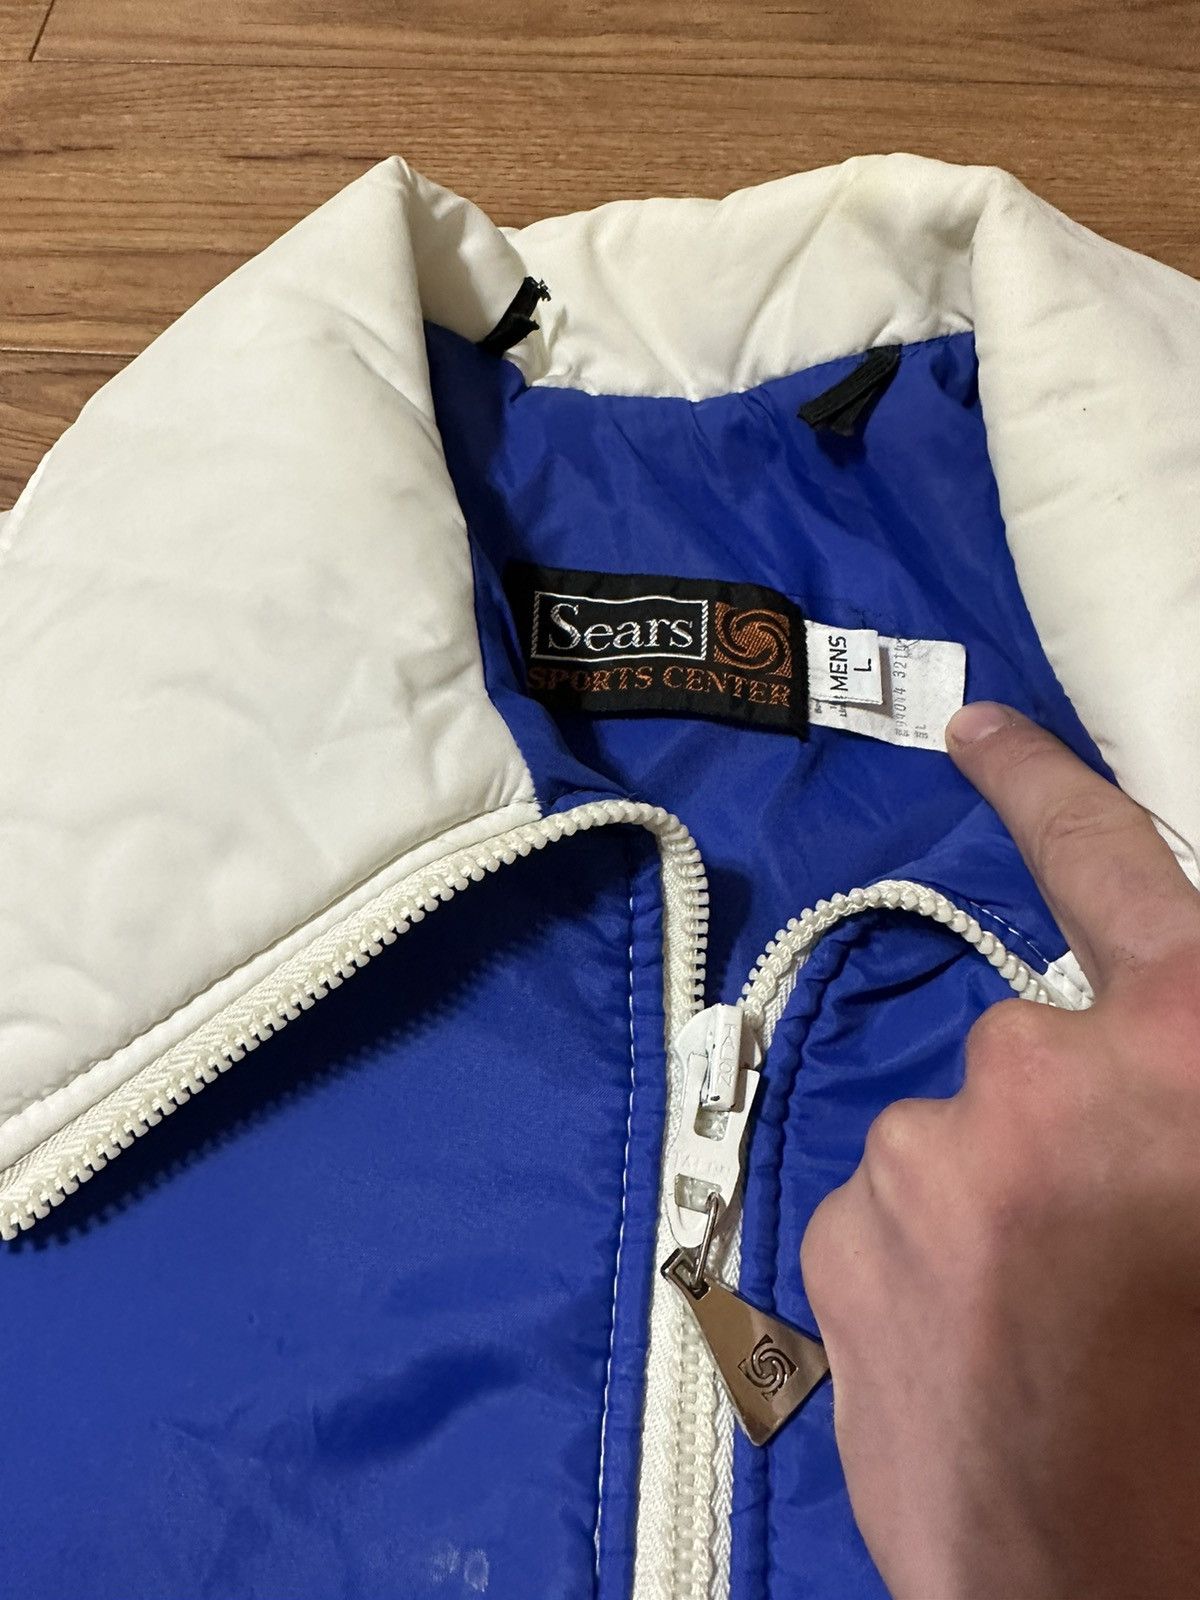 Vintage 1970s USA Made Sears Sportscenter Blue/White Zip up Jacket L Size US L / EU 52-54 / 3 - 3 Thumbnail